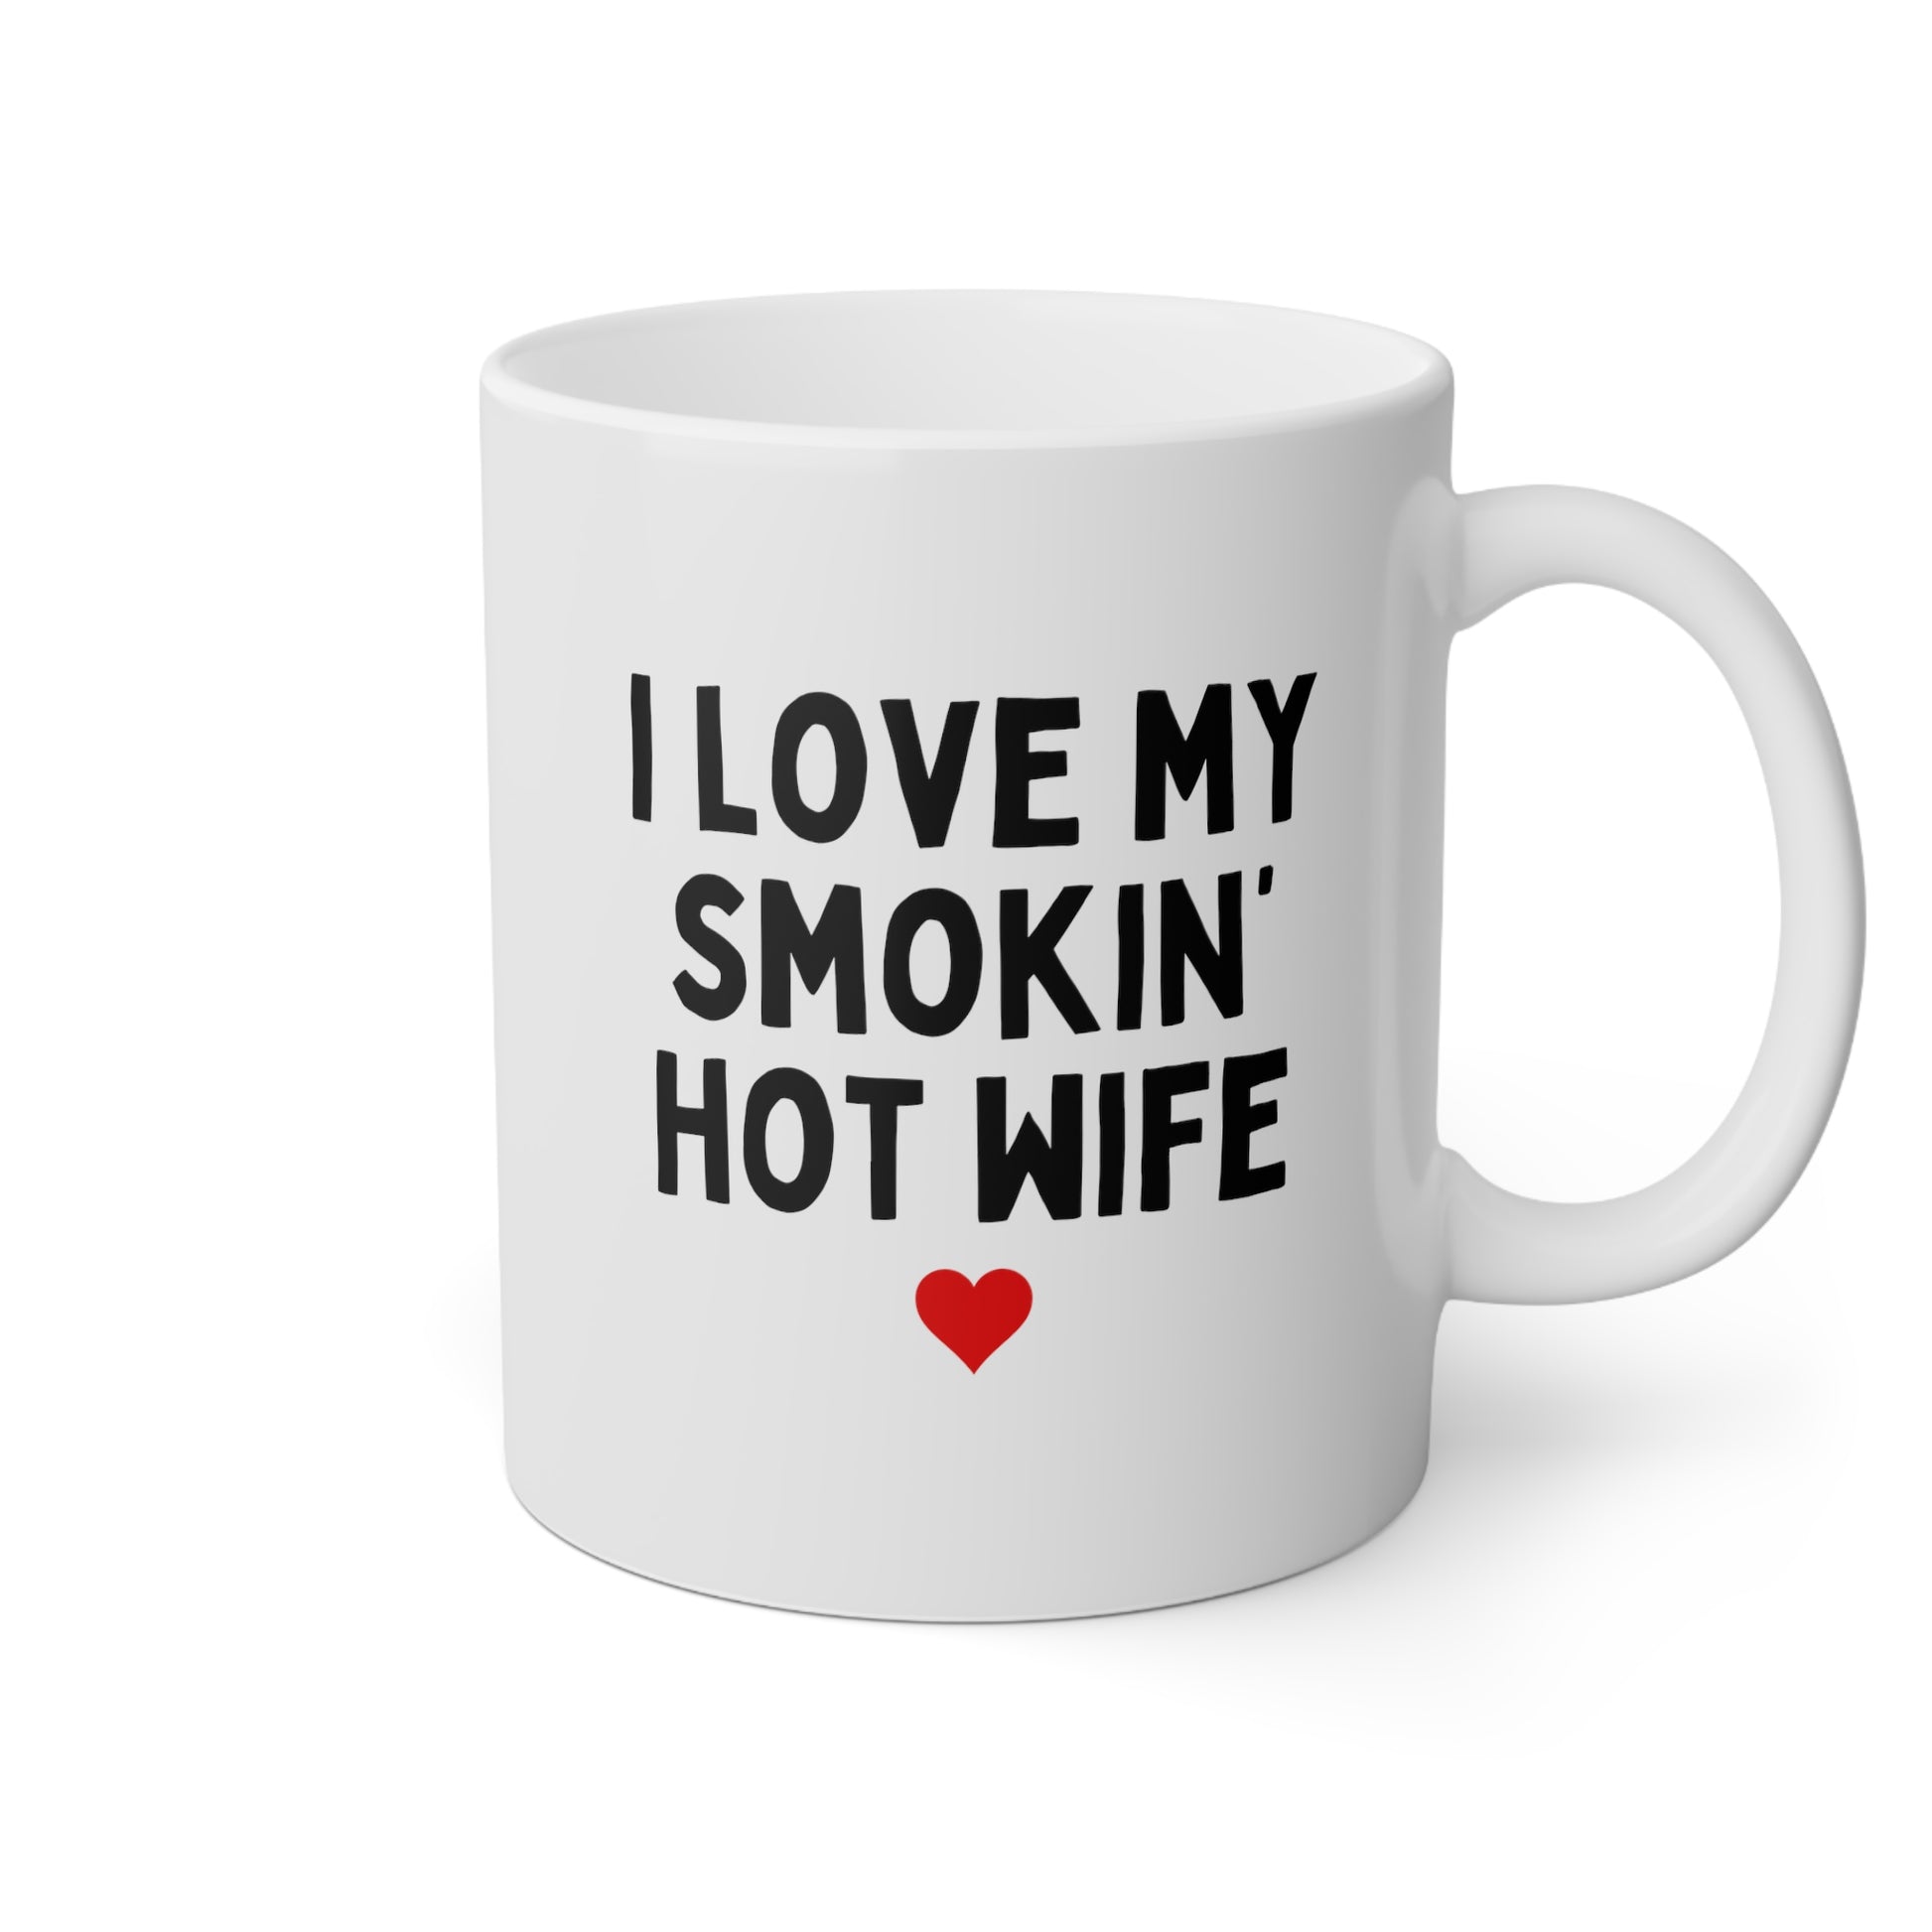 I Love My Smokin Hot Wife 11oz white funny large coffee mug gift for wife fiance valentines day anniversary waveywares wavey wares wavywares wavy wares